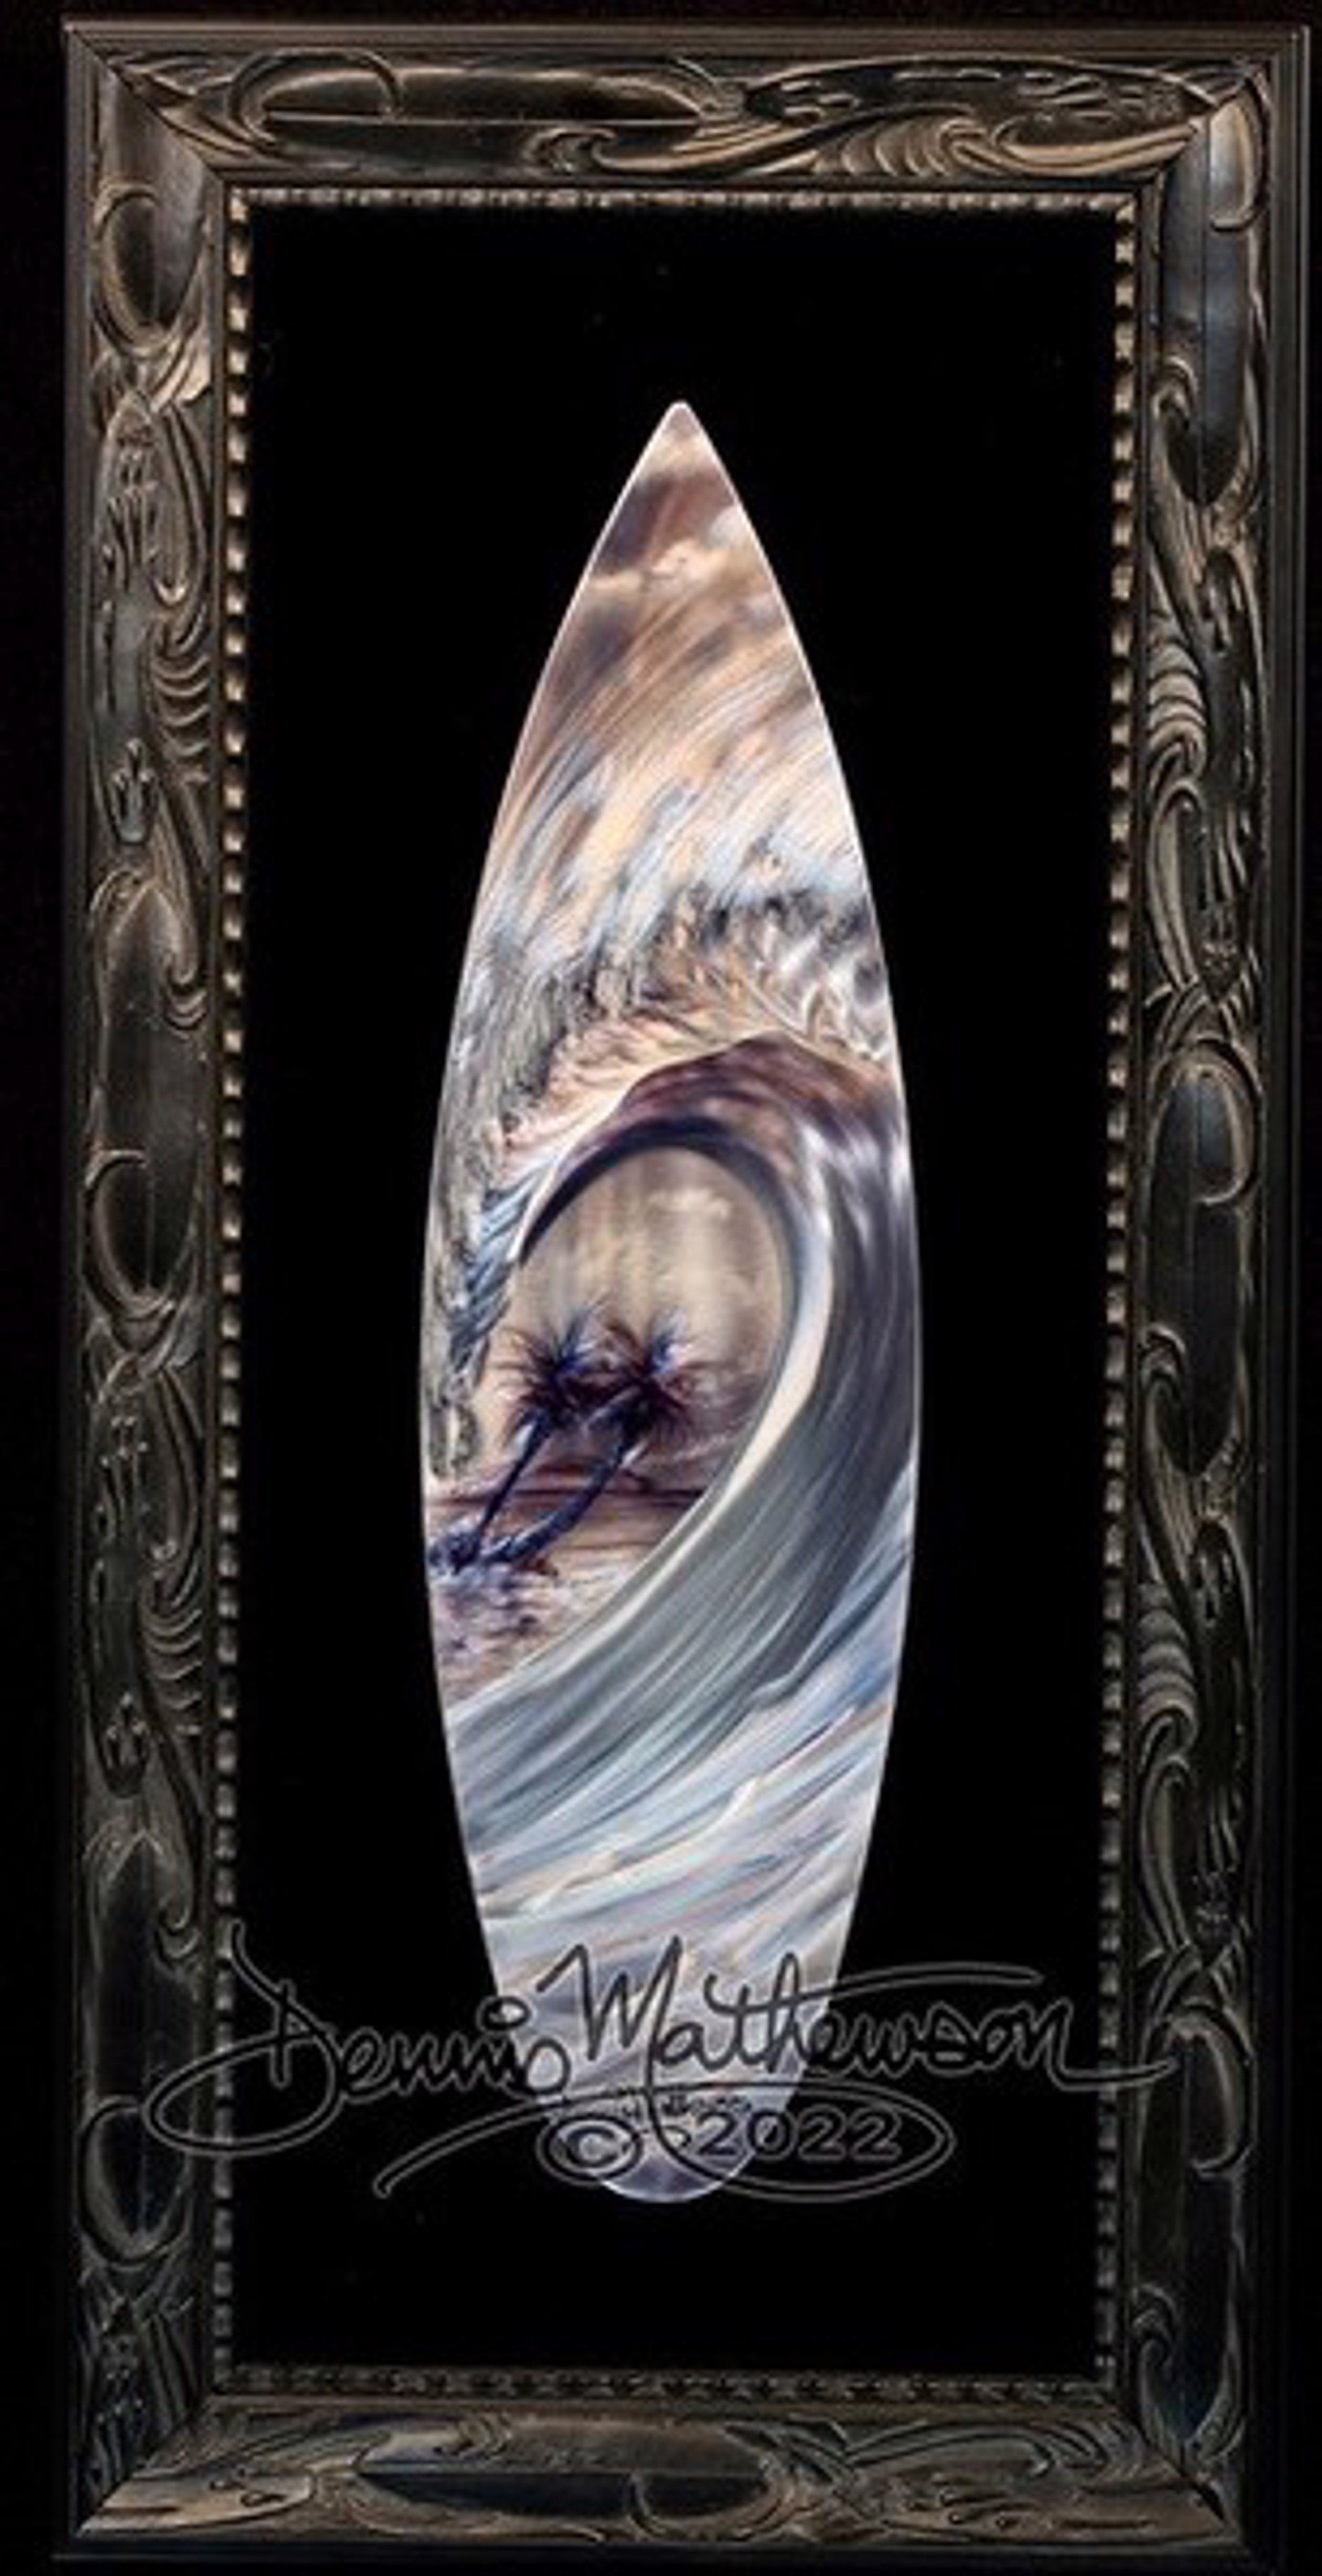 Silver Peak Surfboard by Dennis Mathewson